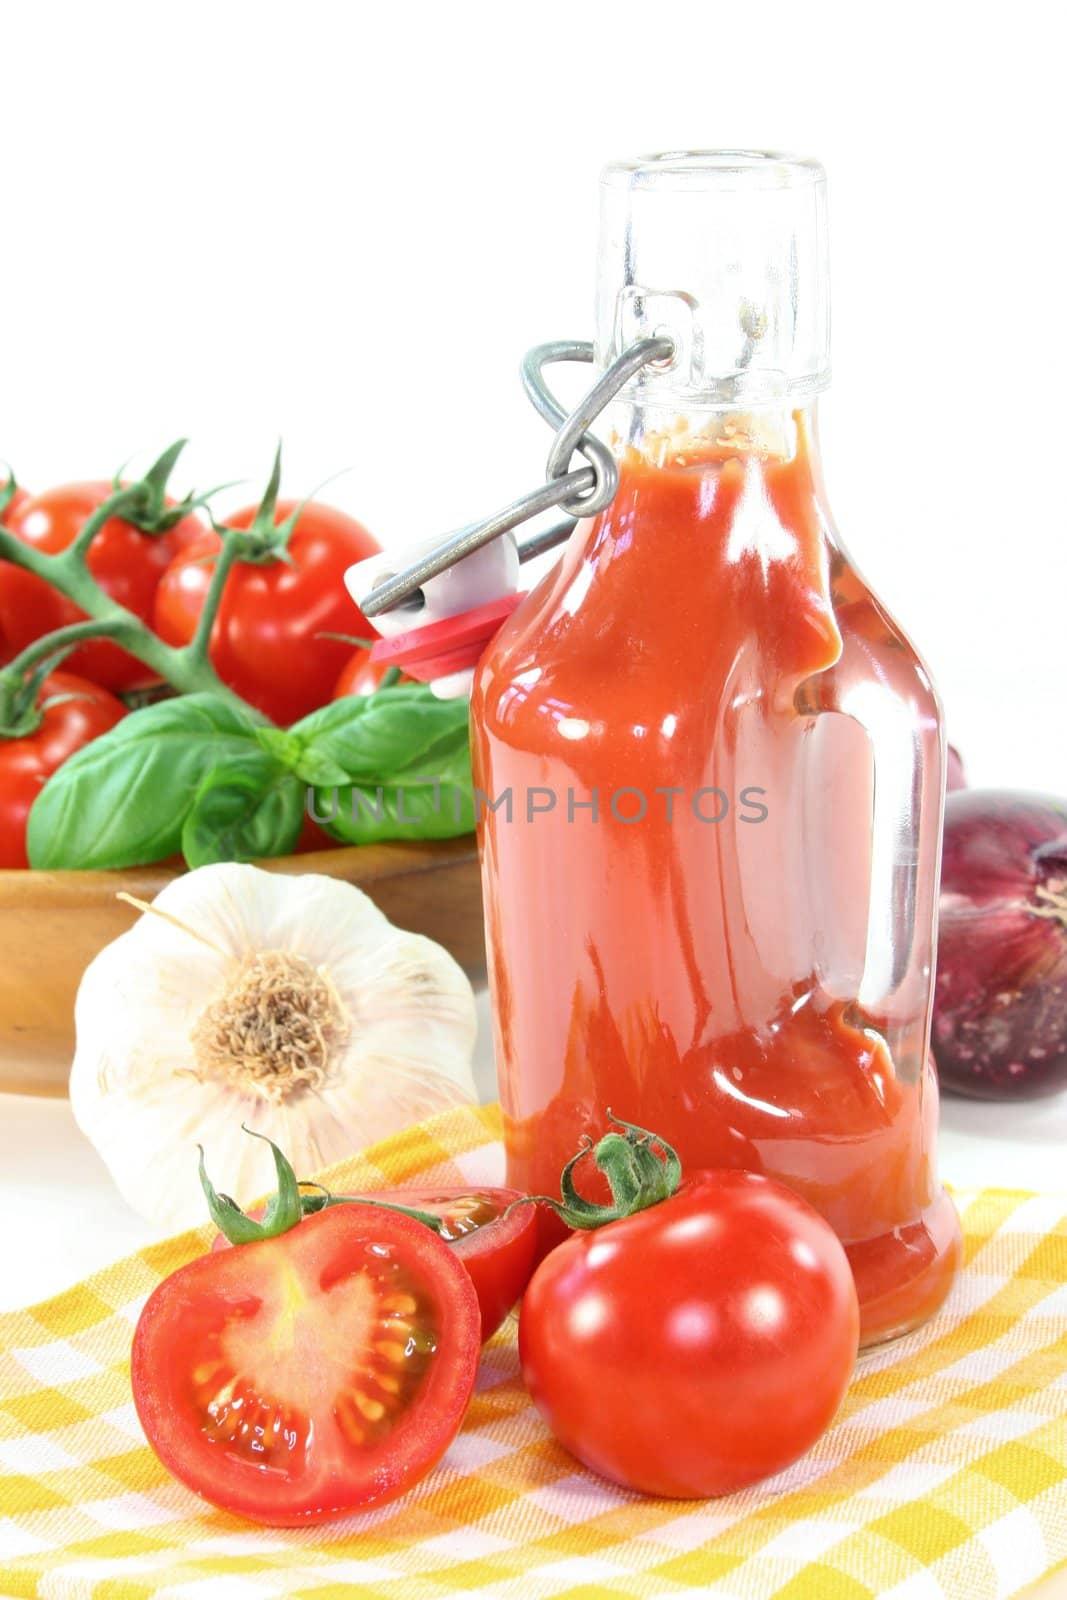 Tomato ketchup with tomatoes, garlic, onions and basil